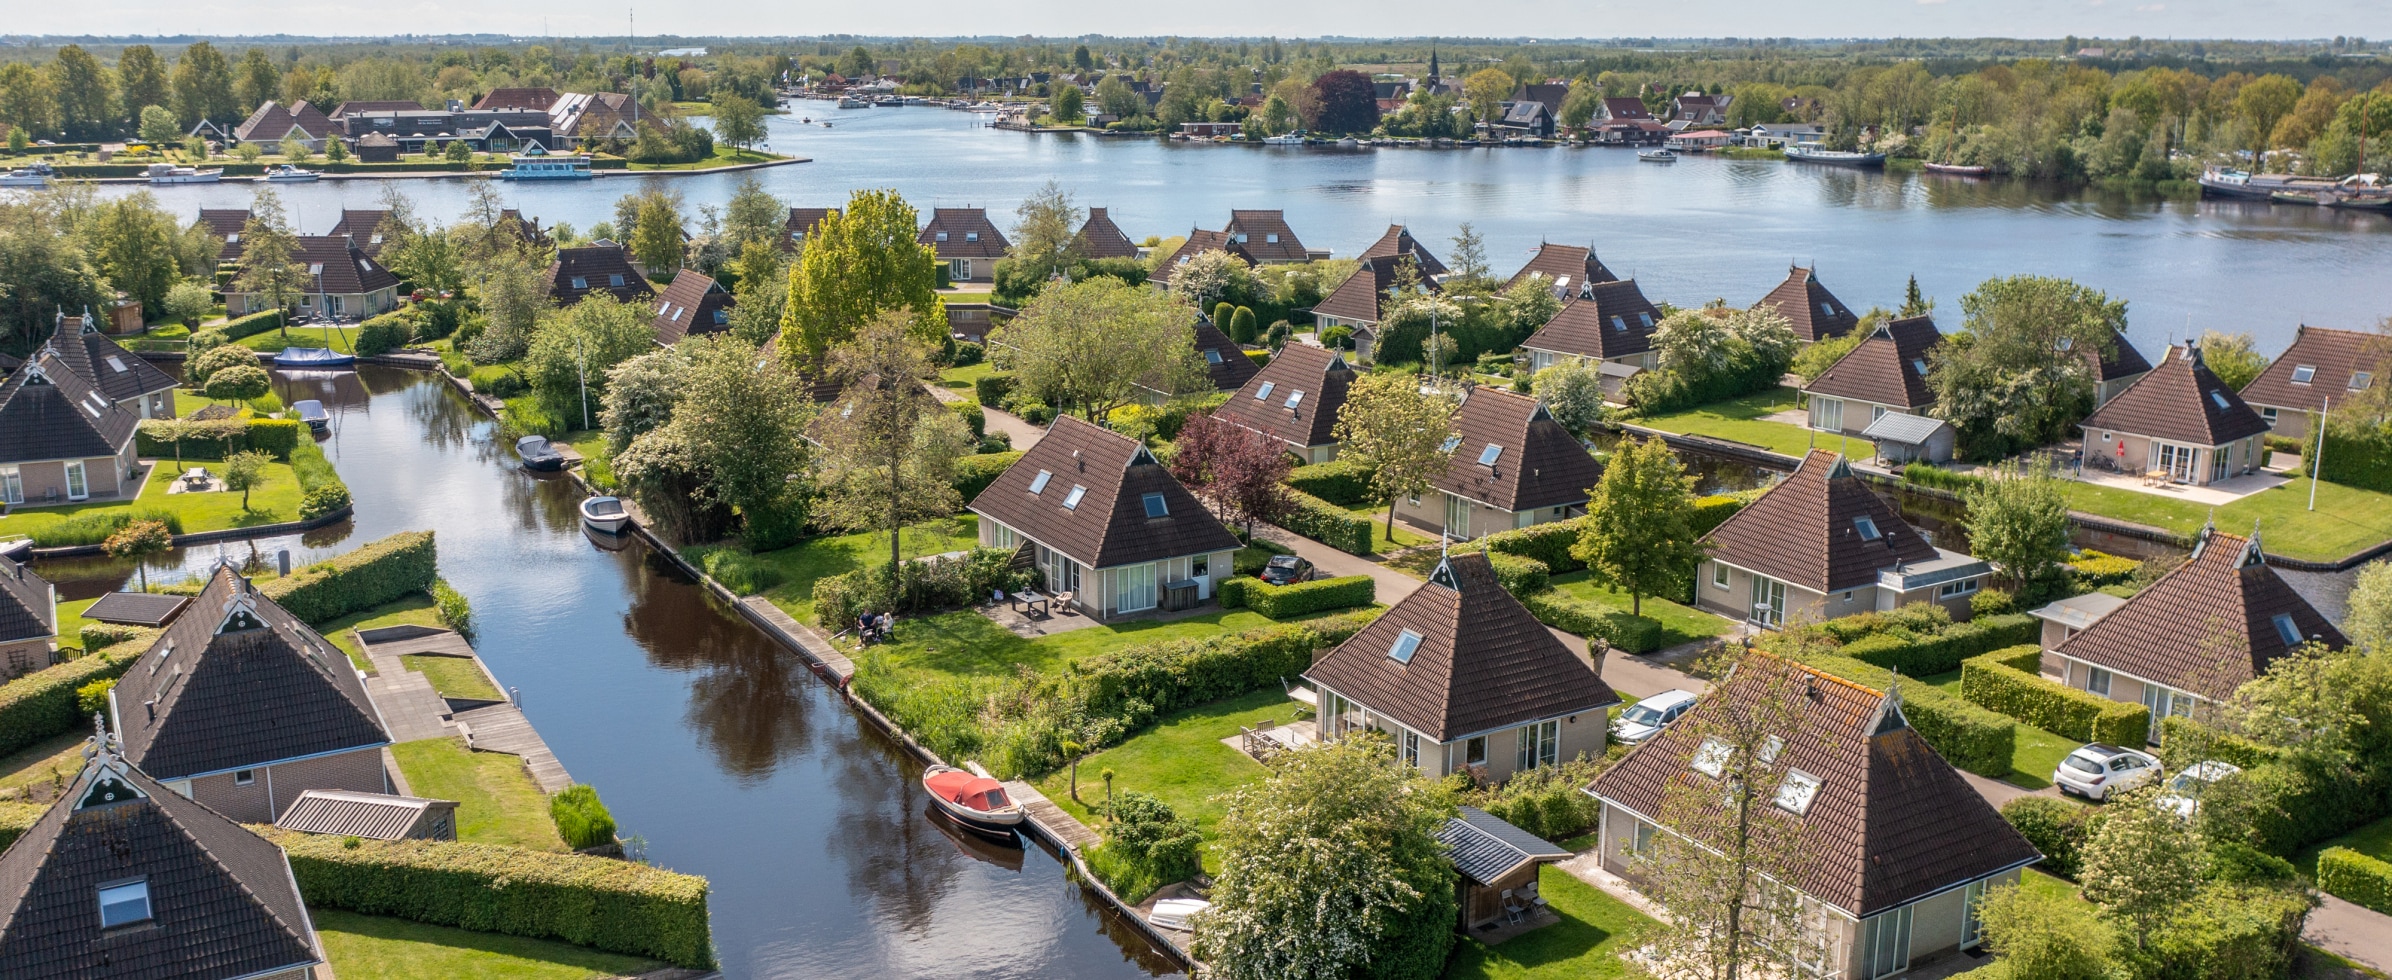 De beste visbestemming in Friesland | Ga op visvakantie in Friesland